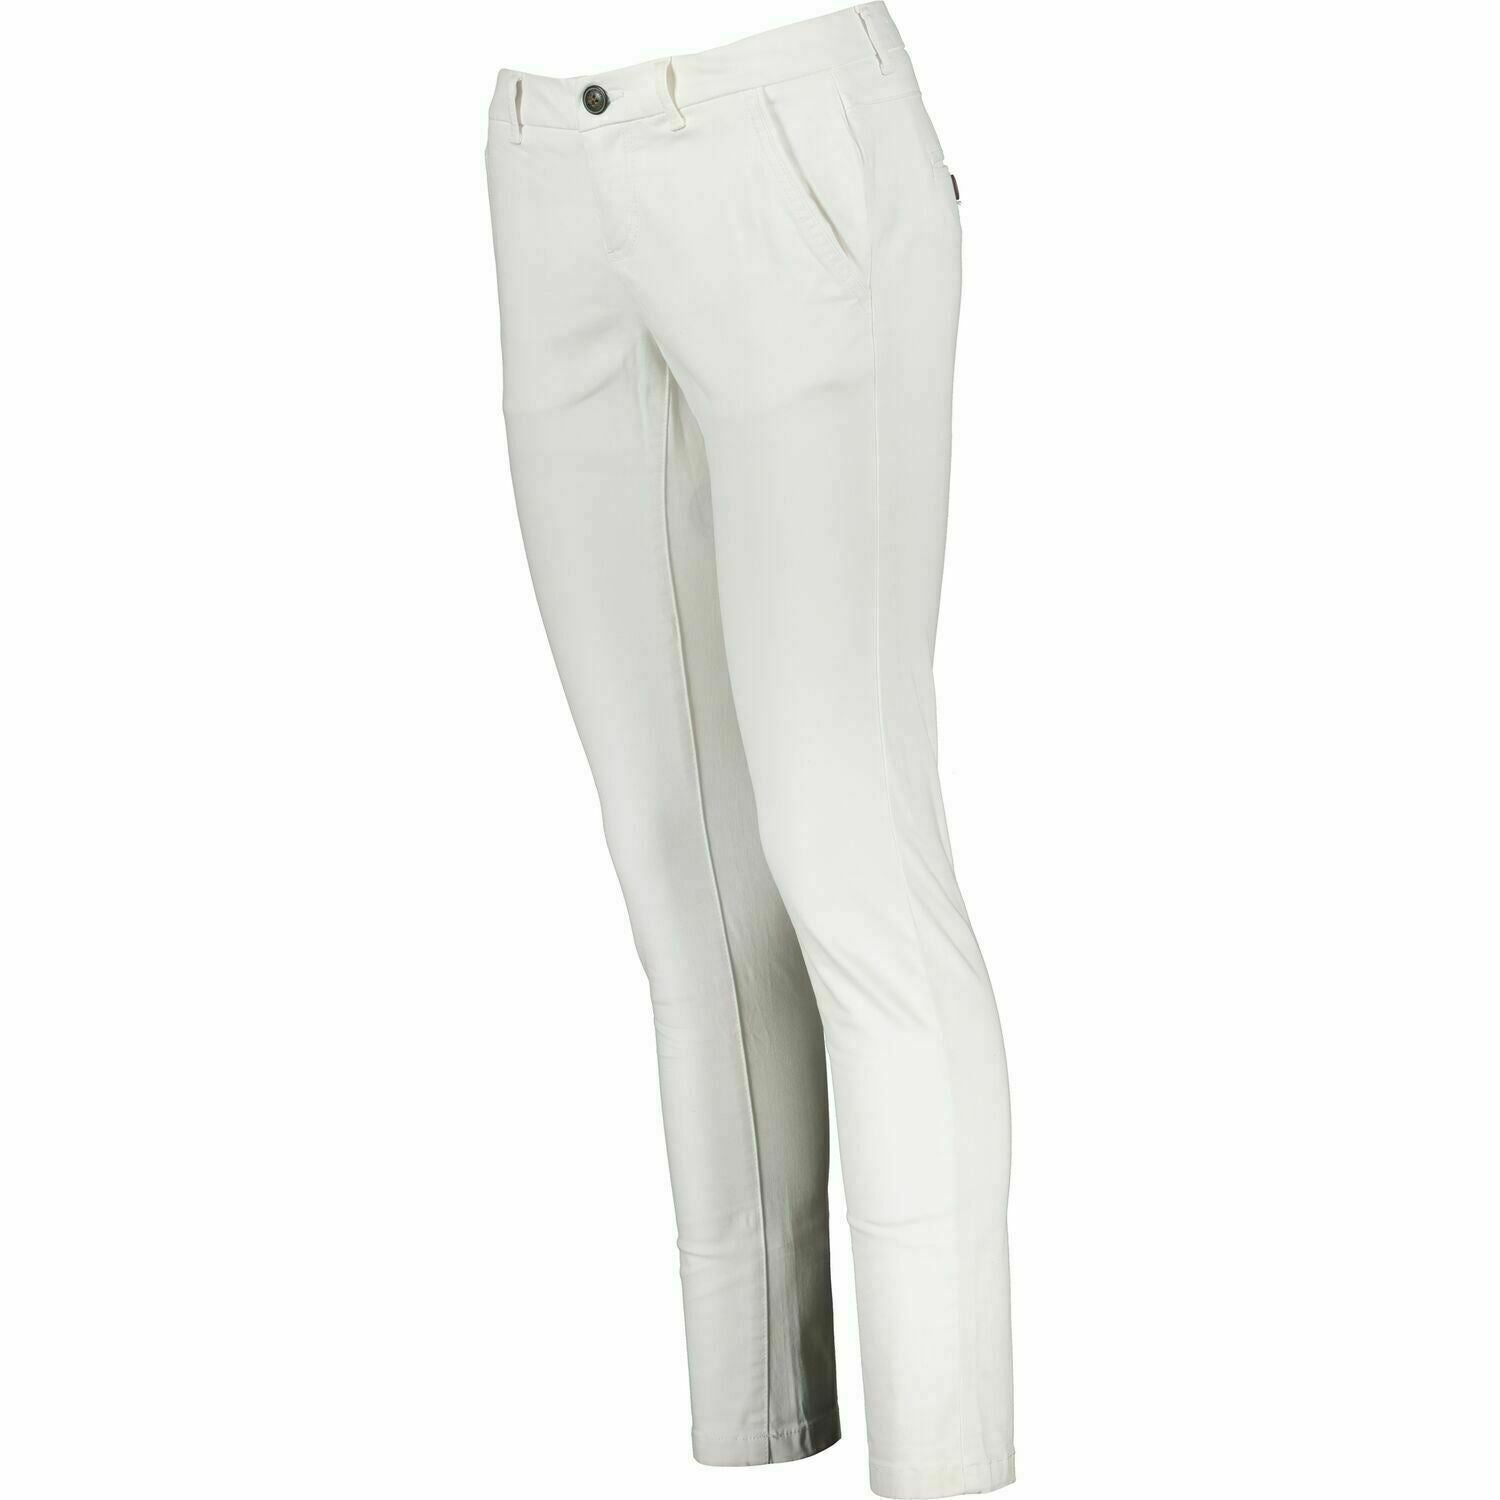 SUPERDRY Women's INTERNATIONAL SWEET Chinos Trousers Slim Fit, Optic White UK 14